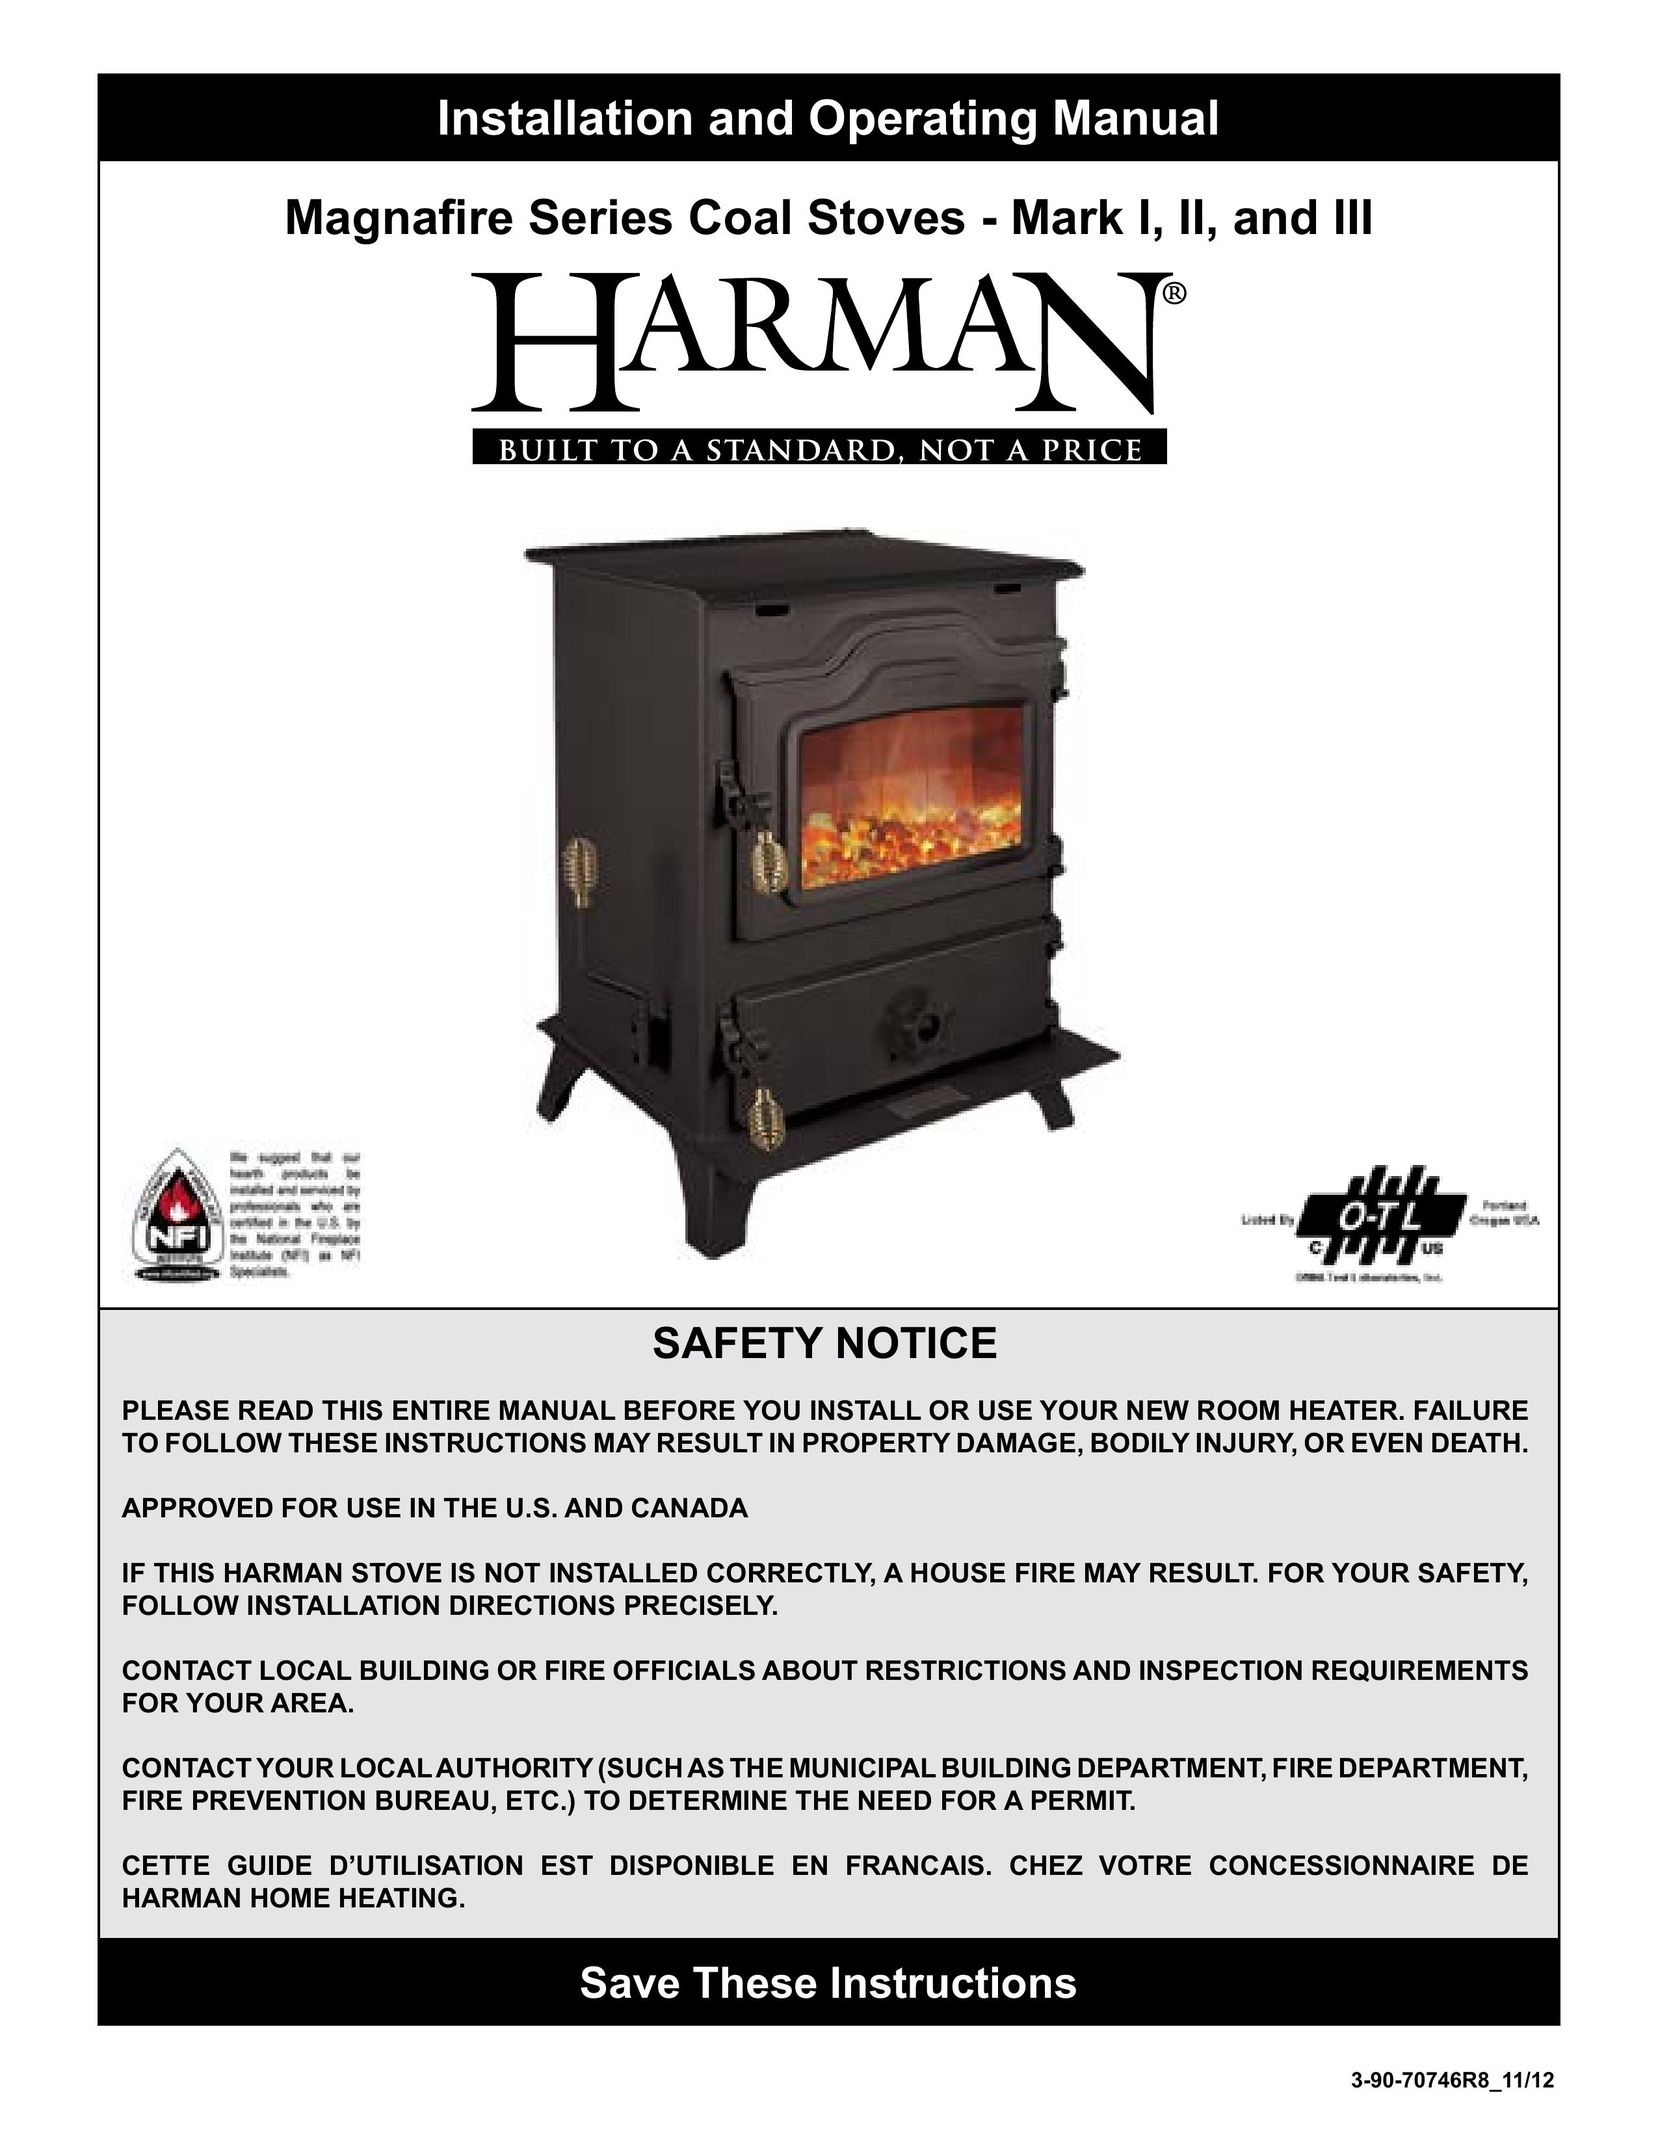 Harman Stove Company Mark I Oven User Manual